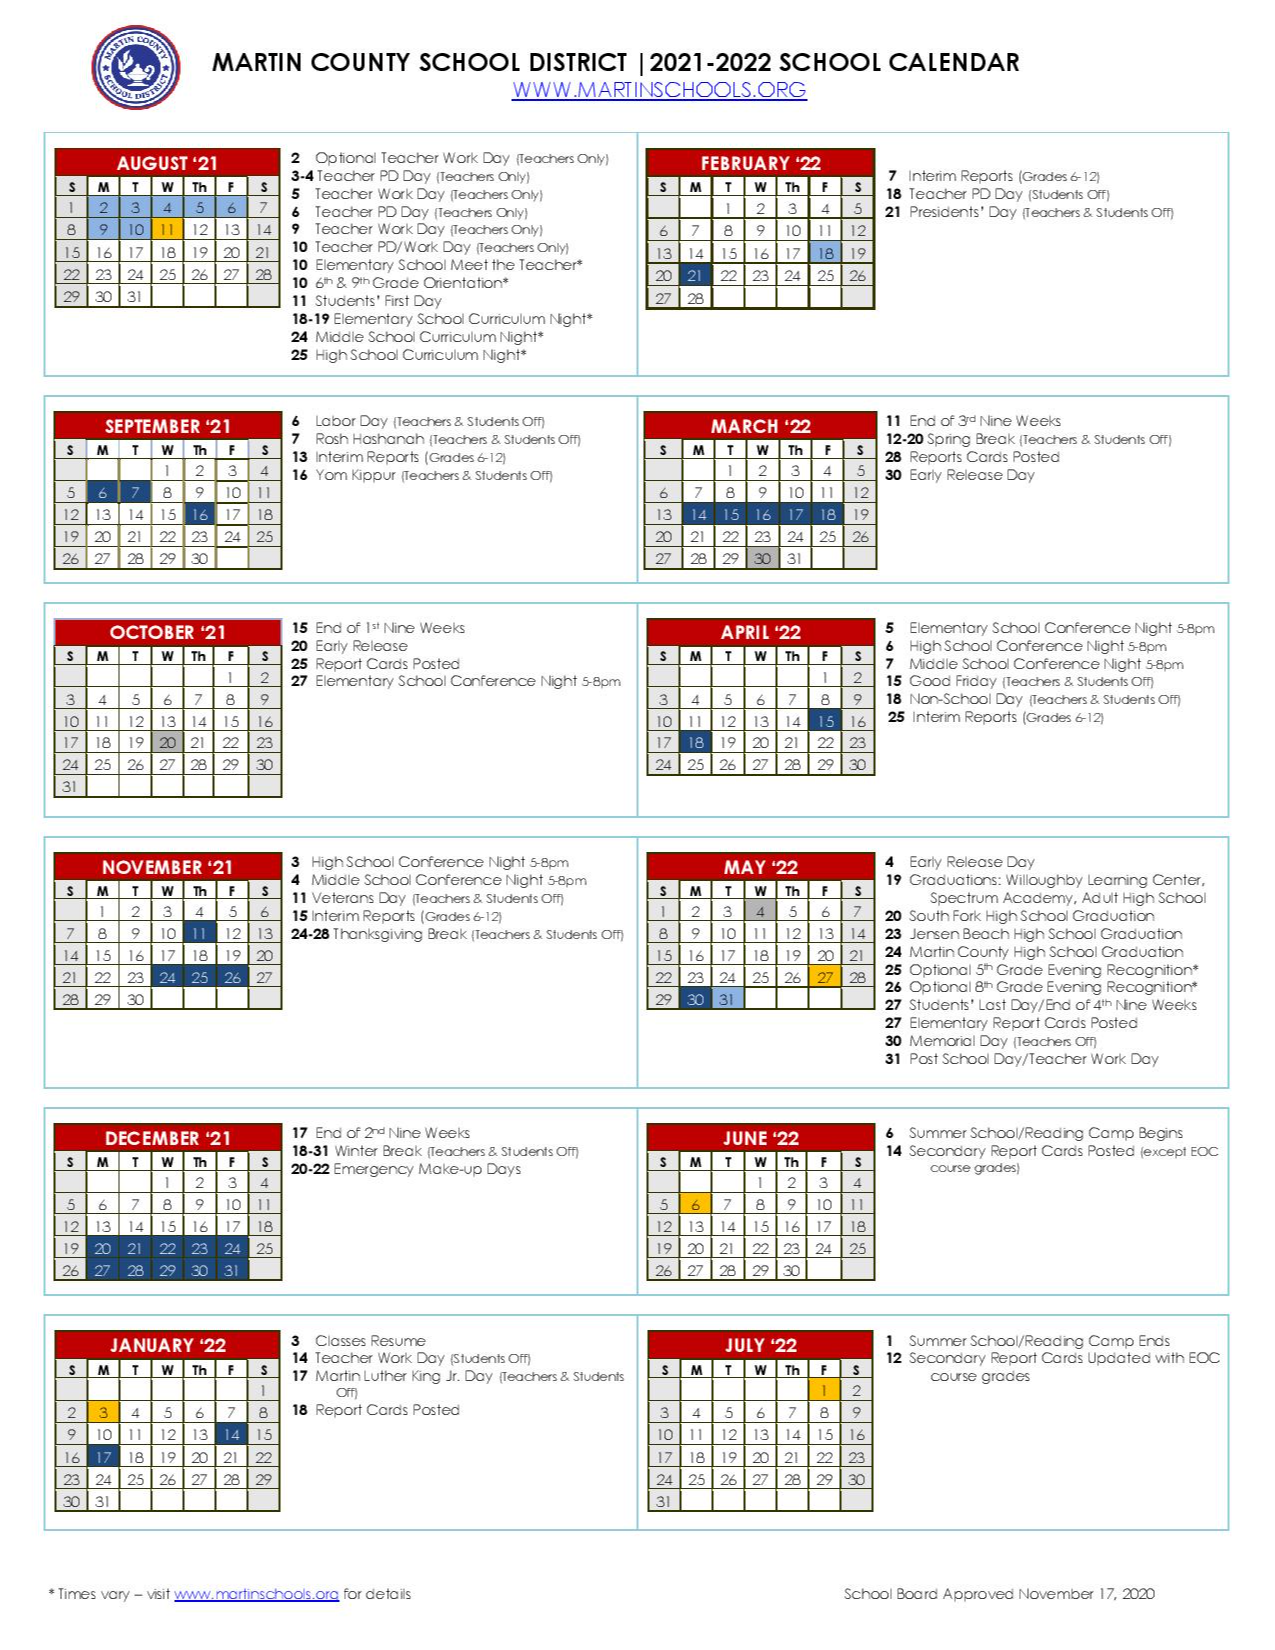 Success Academy Calendar 2022 2023 Calendars | Martin County School District